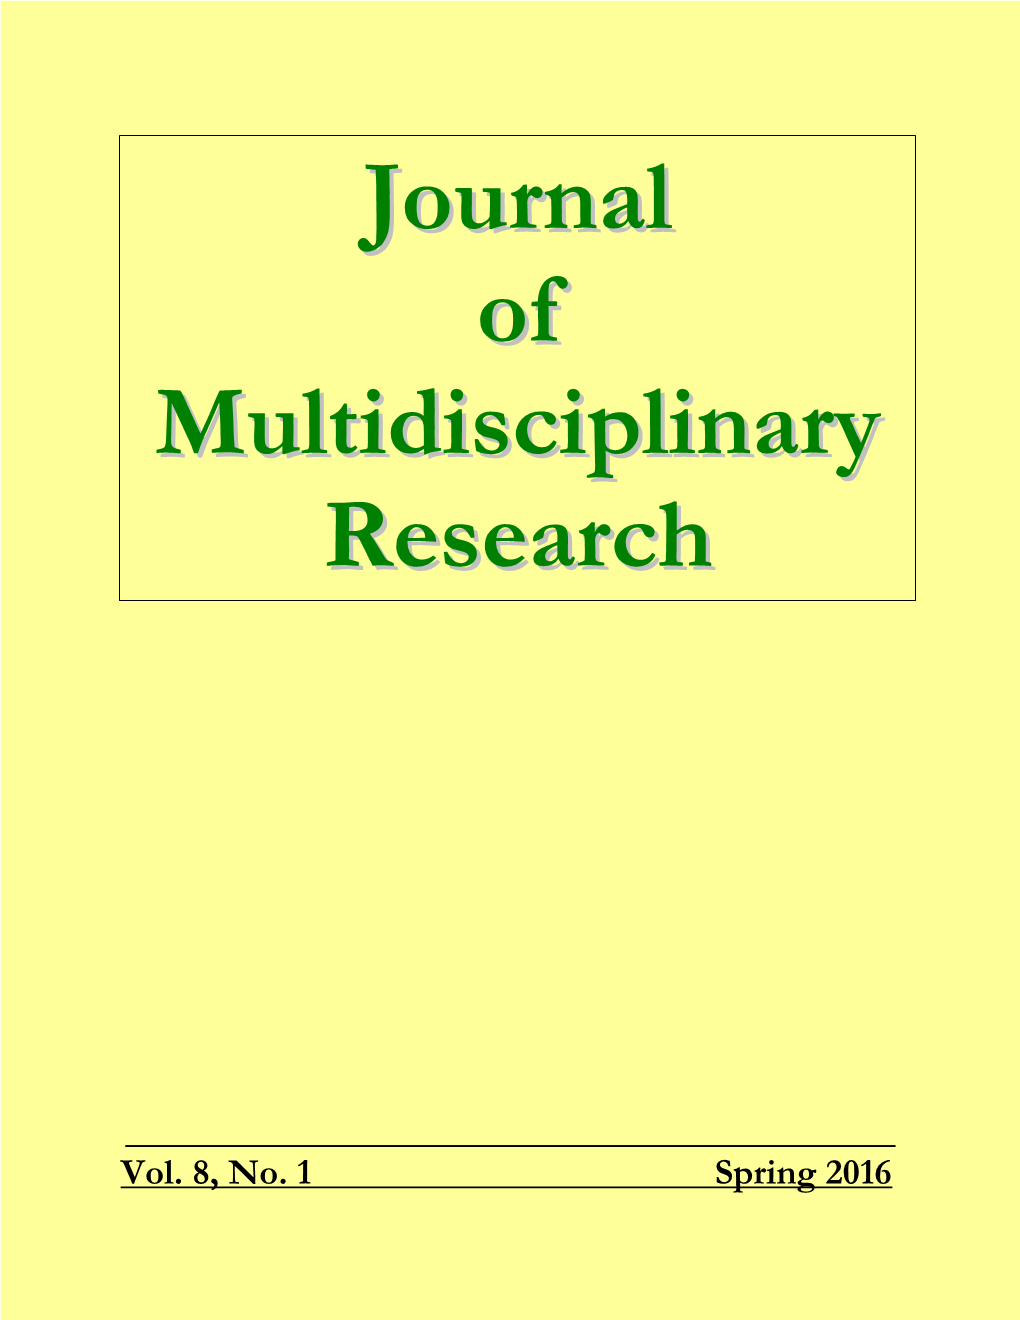 Journal of Multidisciplinary Research C/O O’Mailia Hall, 16401 N.W